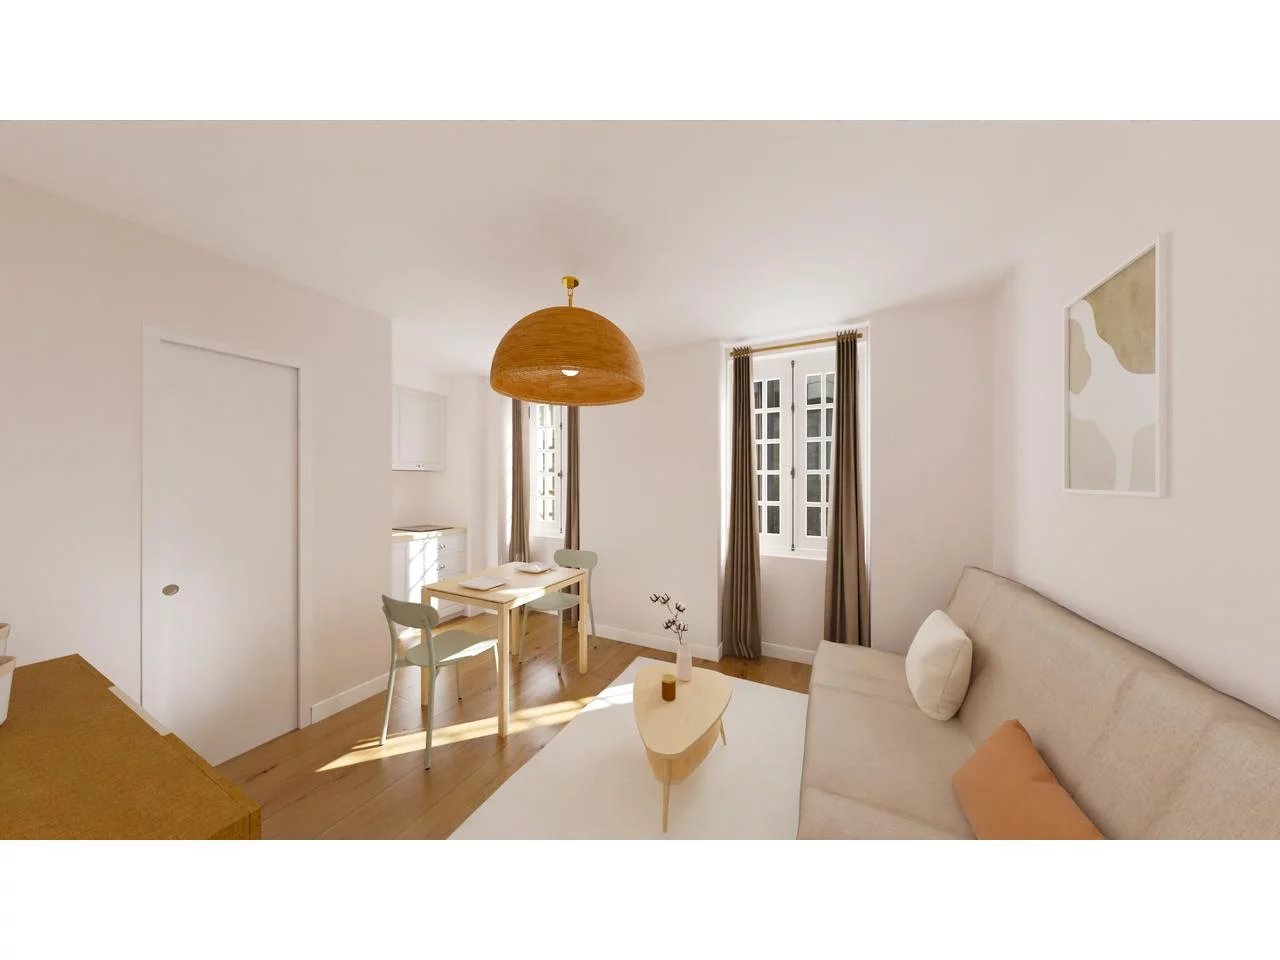 Appartement  1 Locali 15m2  In vendita   120 000 €